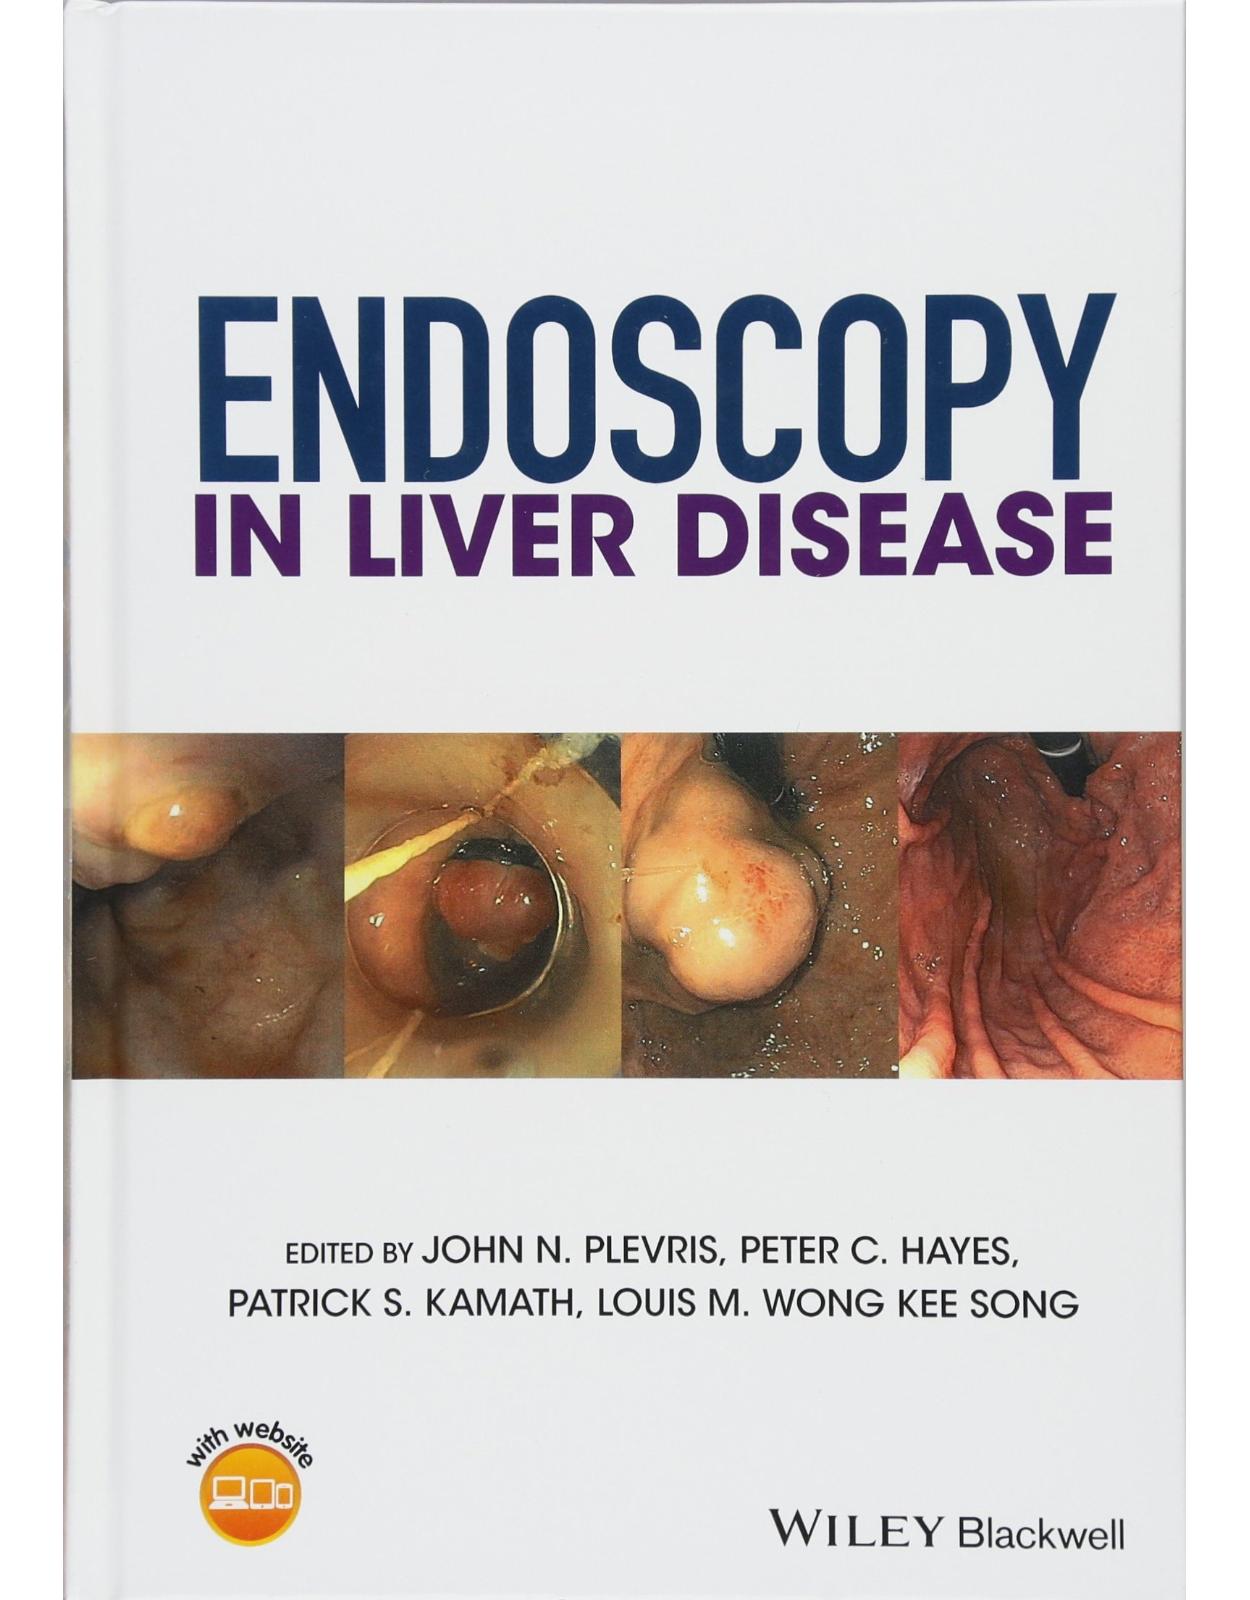 Endoscopy in Liver Disease